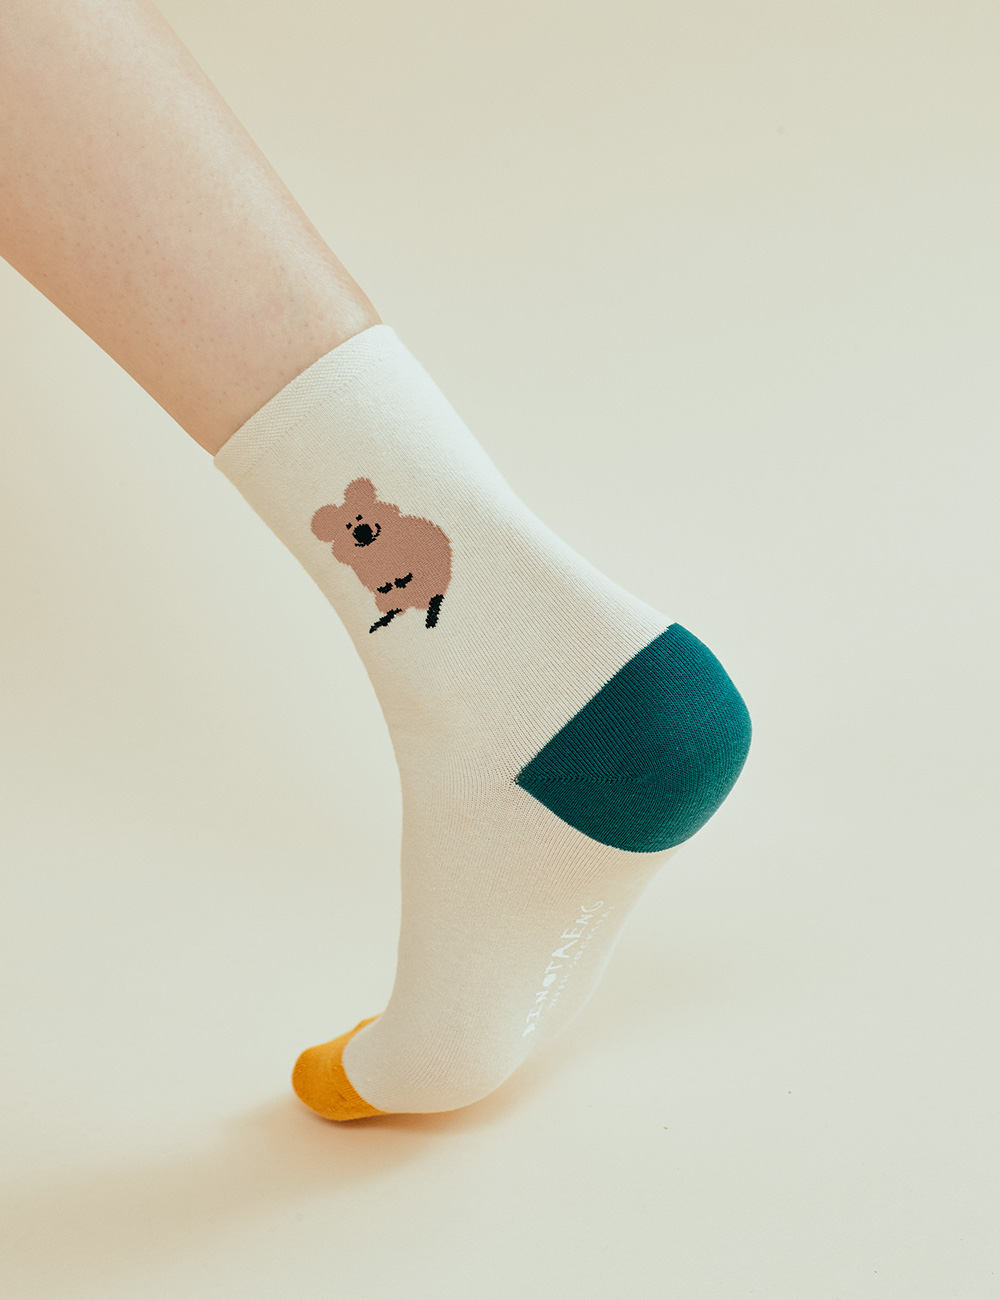 sockstaz socks